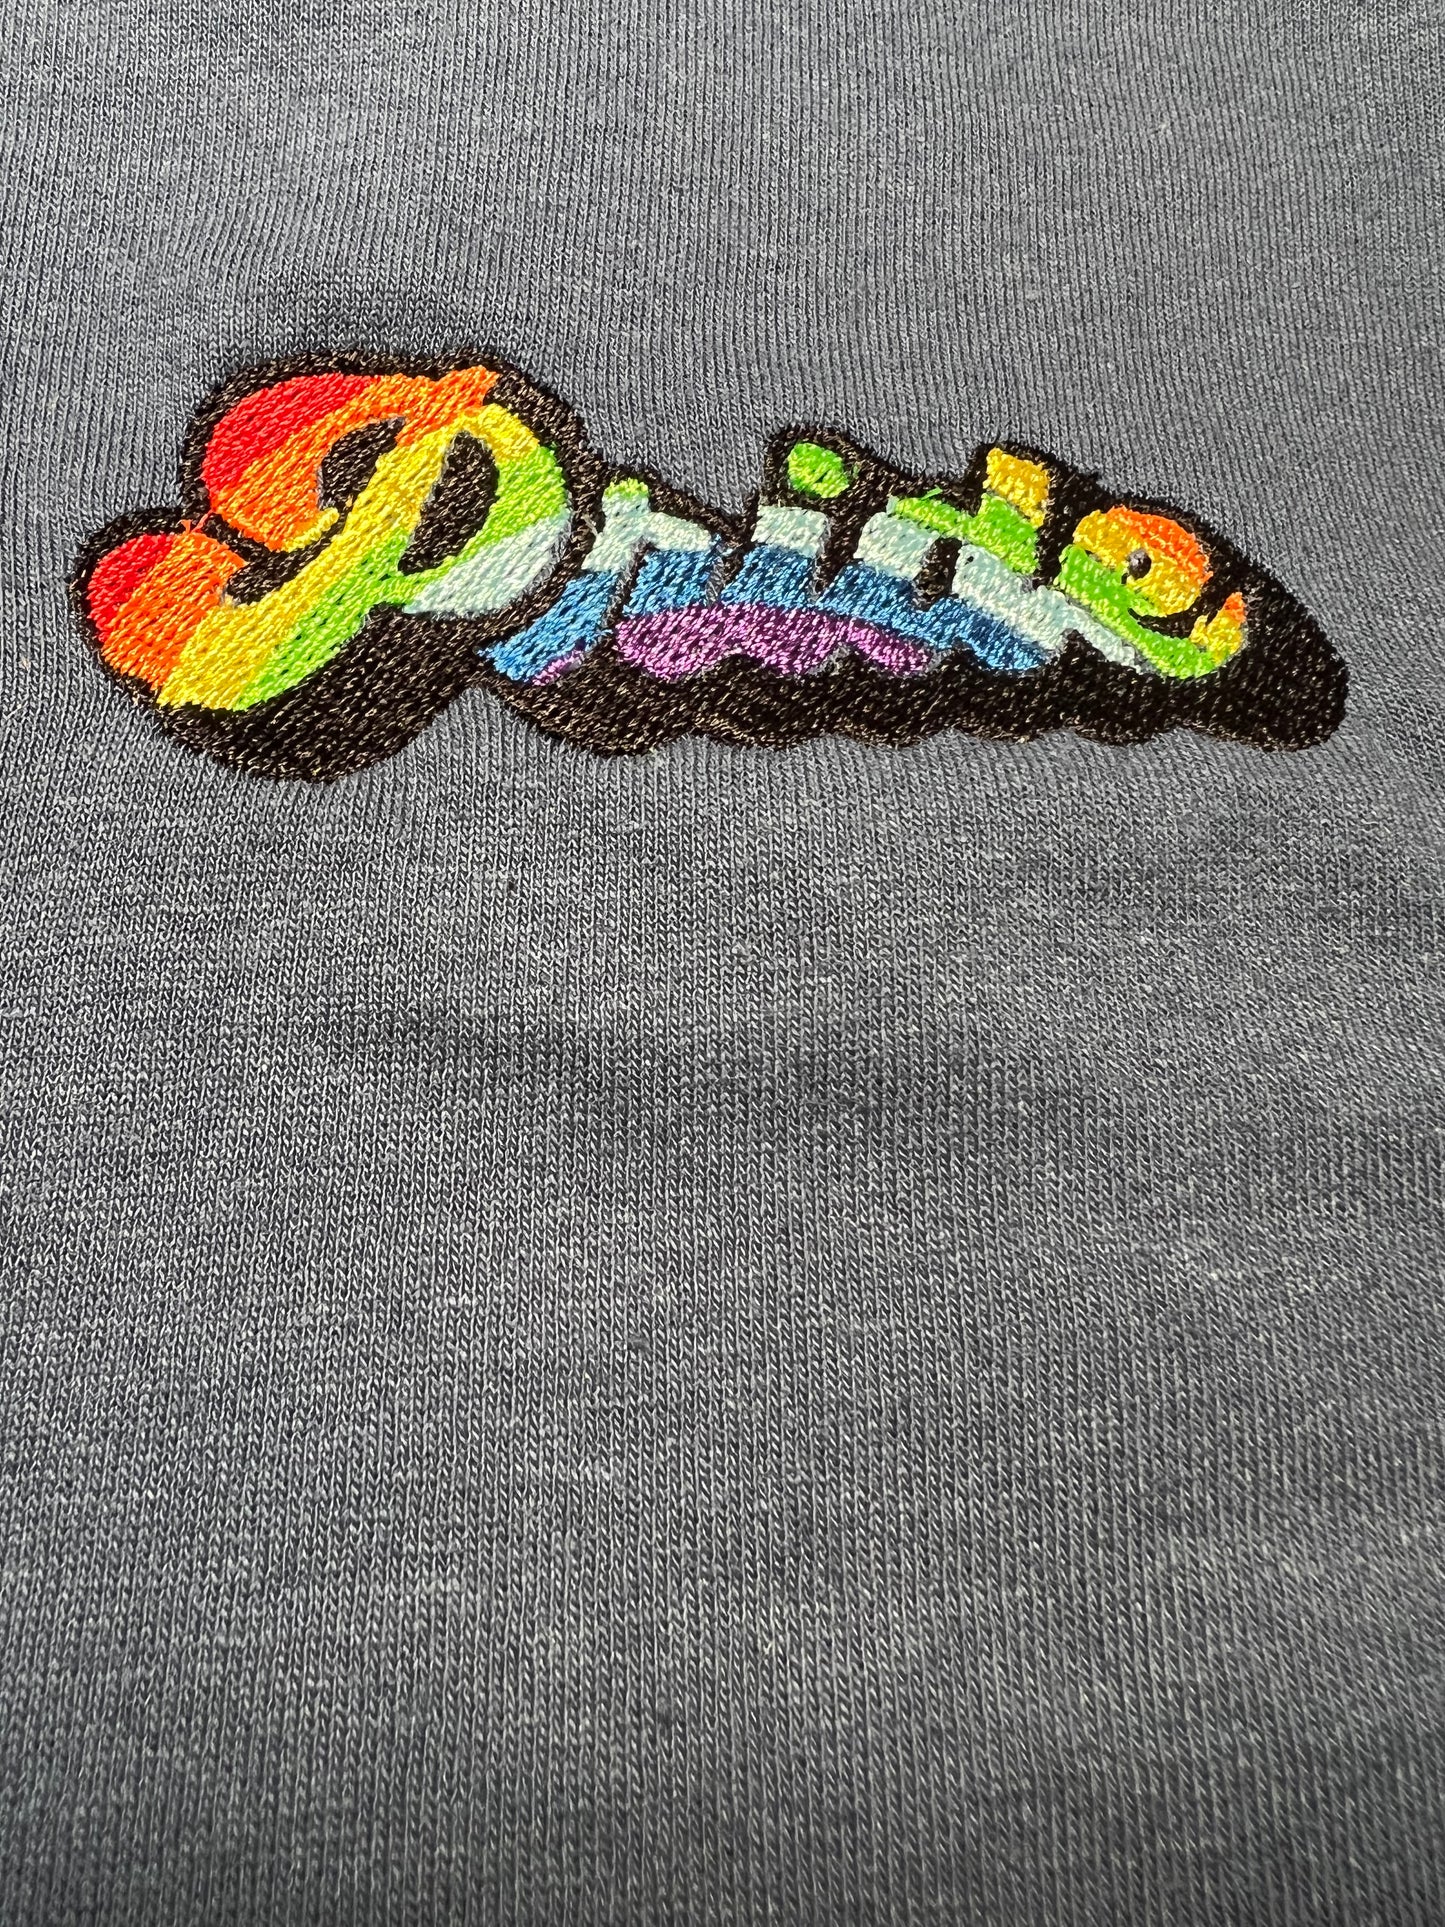 Embroidered Groovy Pride Tee